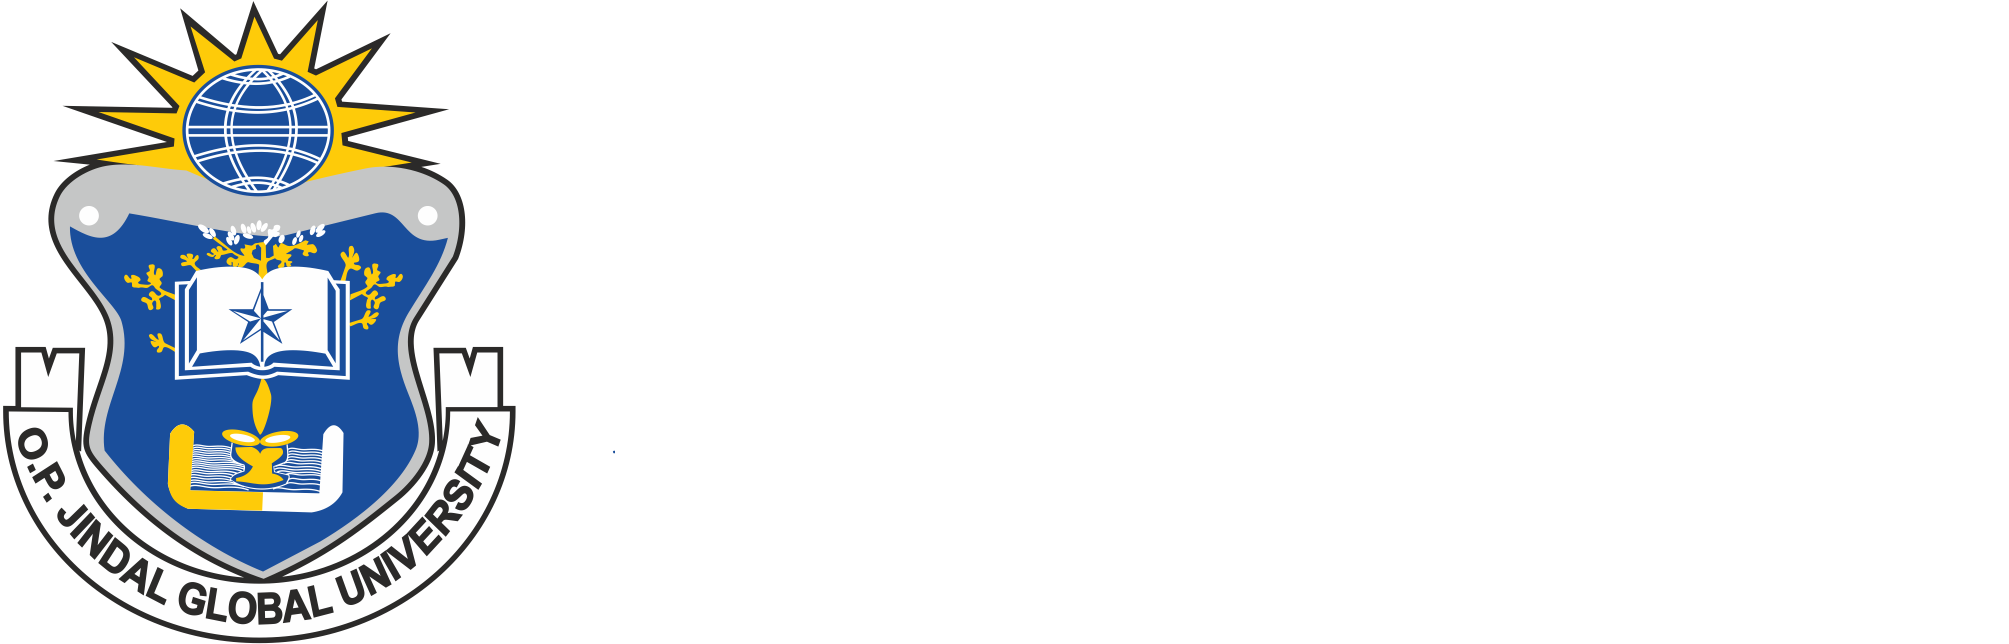 Office of International Affairs & Global Initiatives